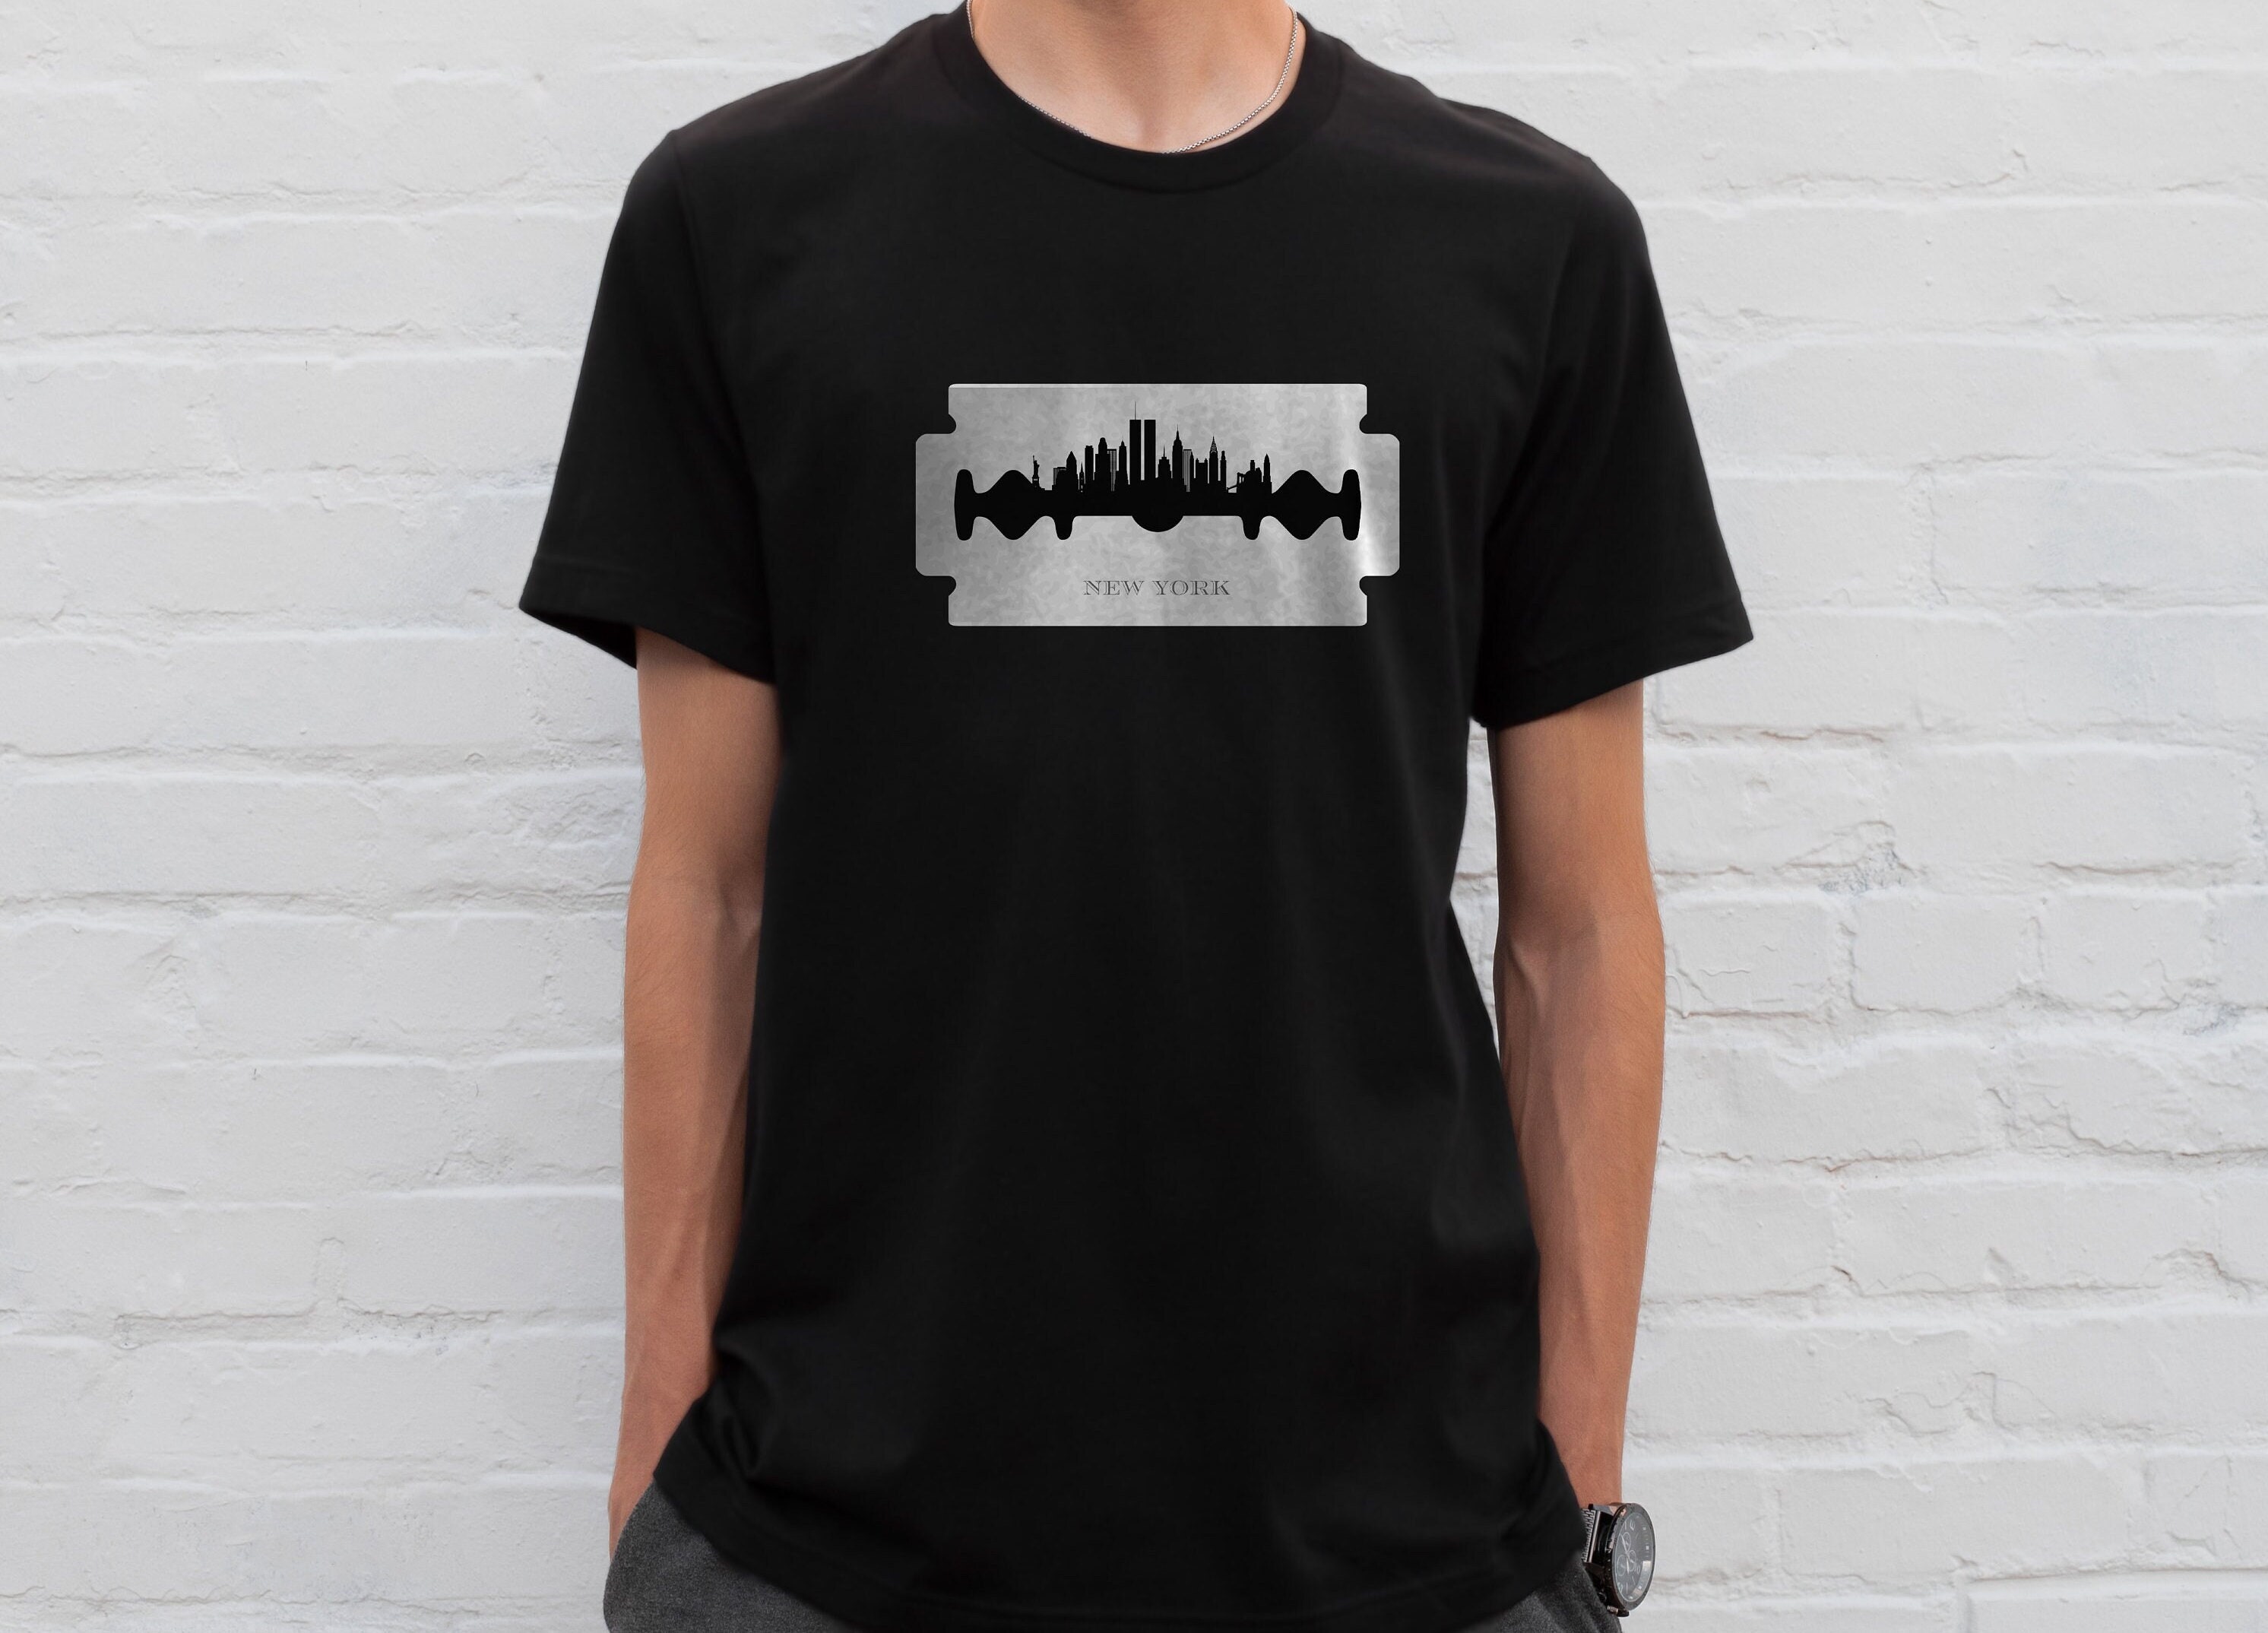 Razor blade emo T-Shirts, Unique Designs